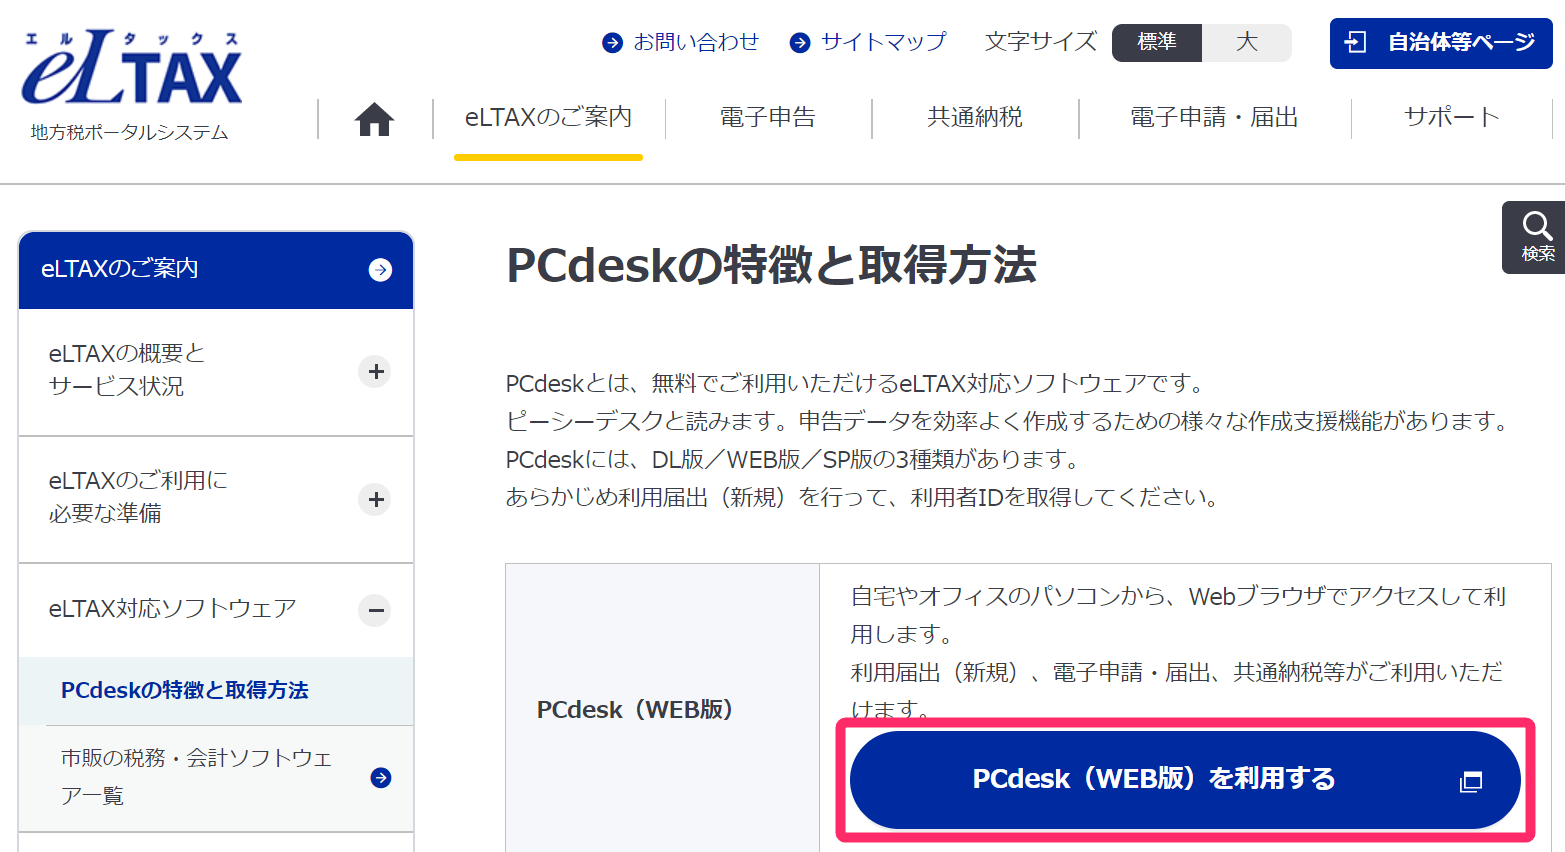 eLTAXサイトで［PCdesk（WEB版）を利用する］ボタンを指し示しているスクリーンショット